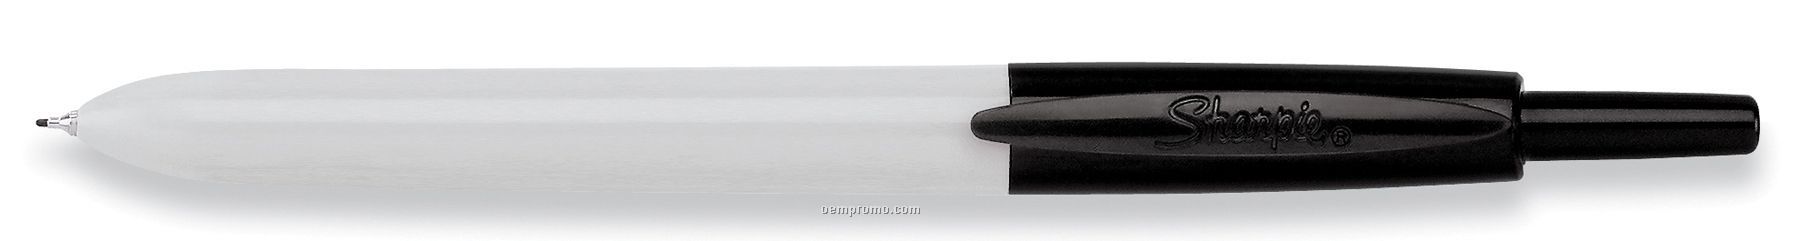 Sharpie Ultra Fine Retractable Black Permanent Marker